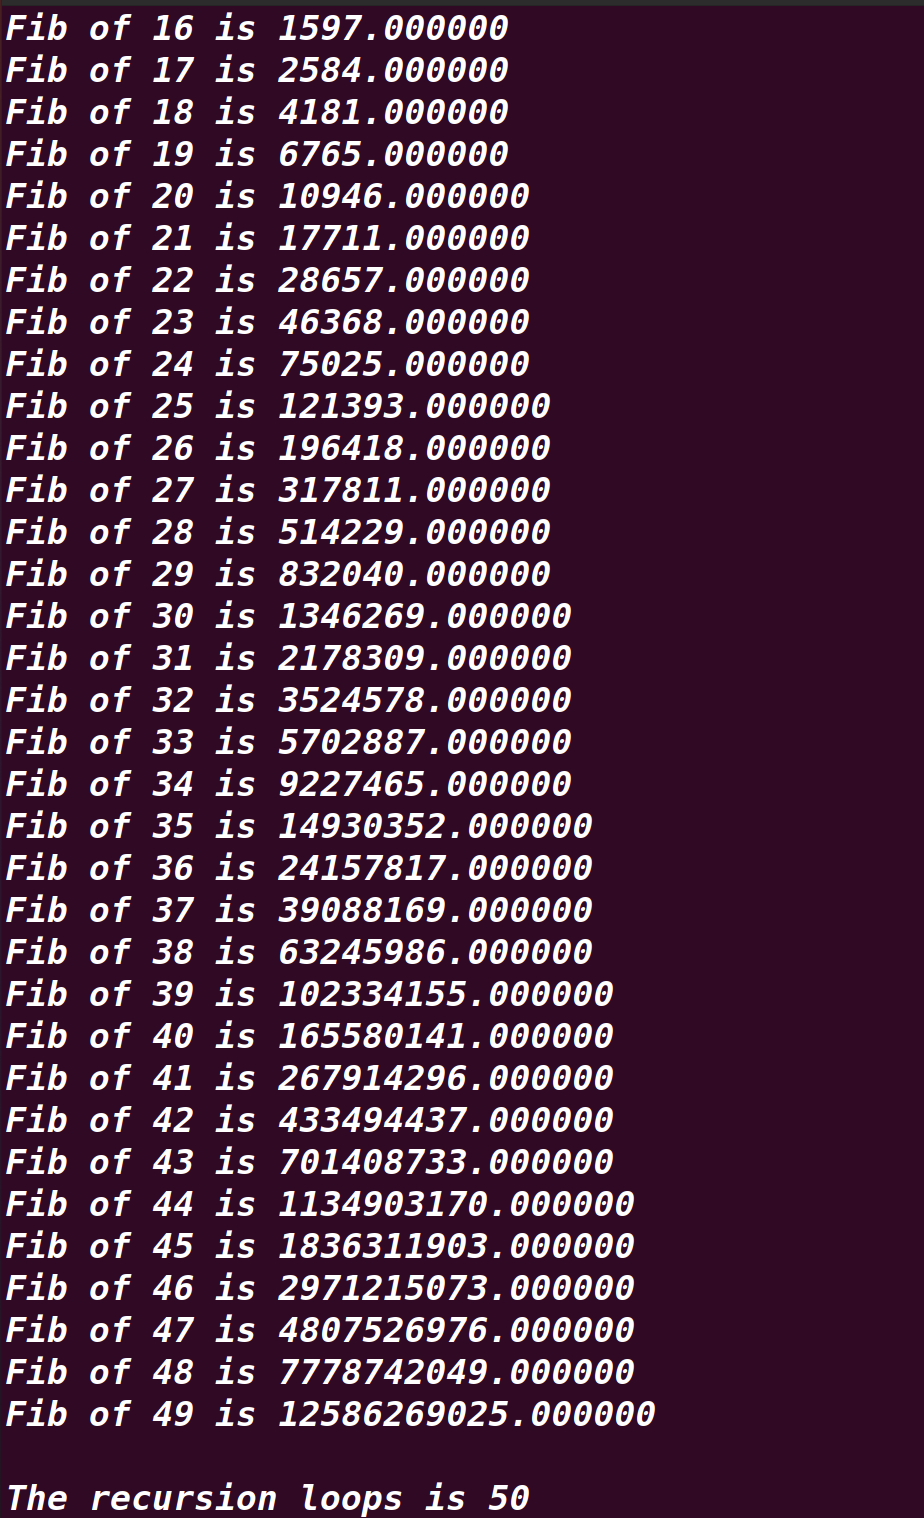 Original Fibonacci and optimized Fibonacci functions and use the third variable to log the recursion times quantitatively